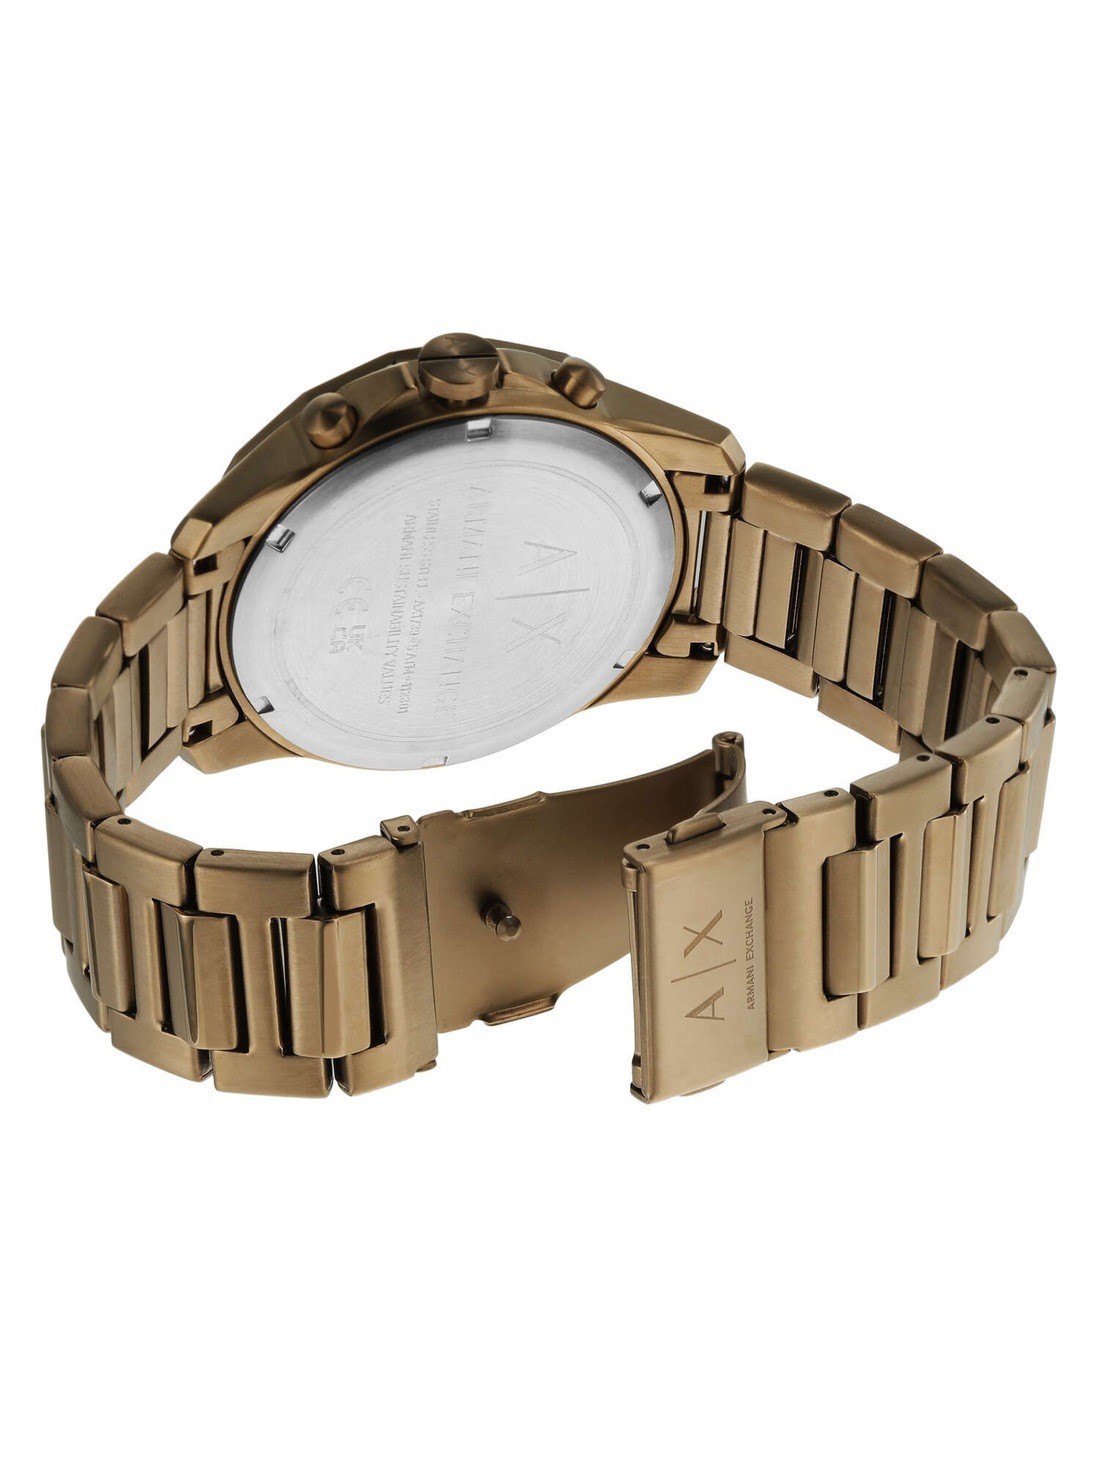 Armani Exchange AX2138 Mens Black Stainless Steel Analog Dial Quartz Watch  MP514 | eBay